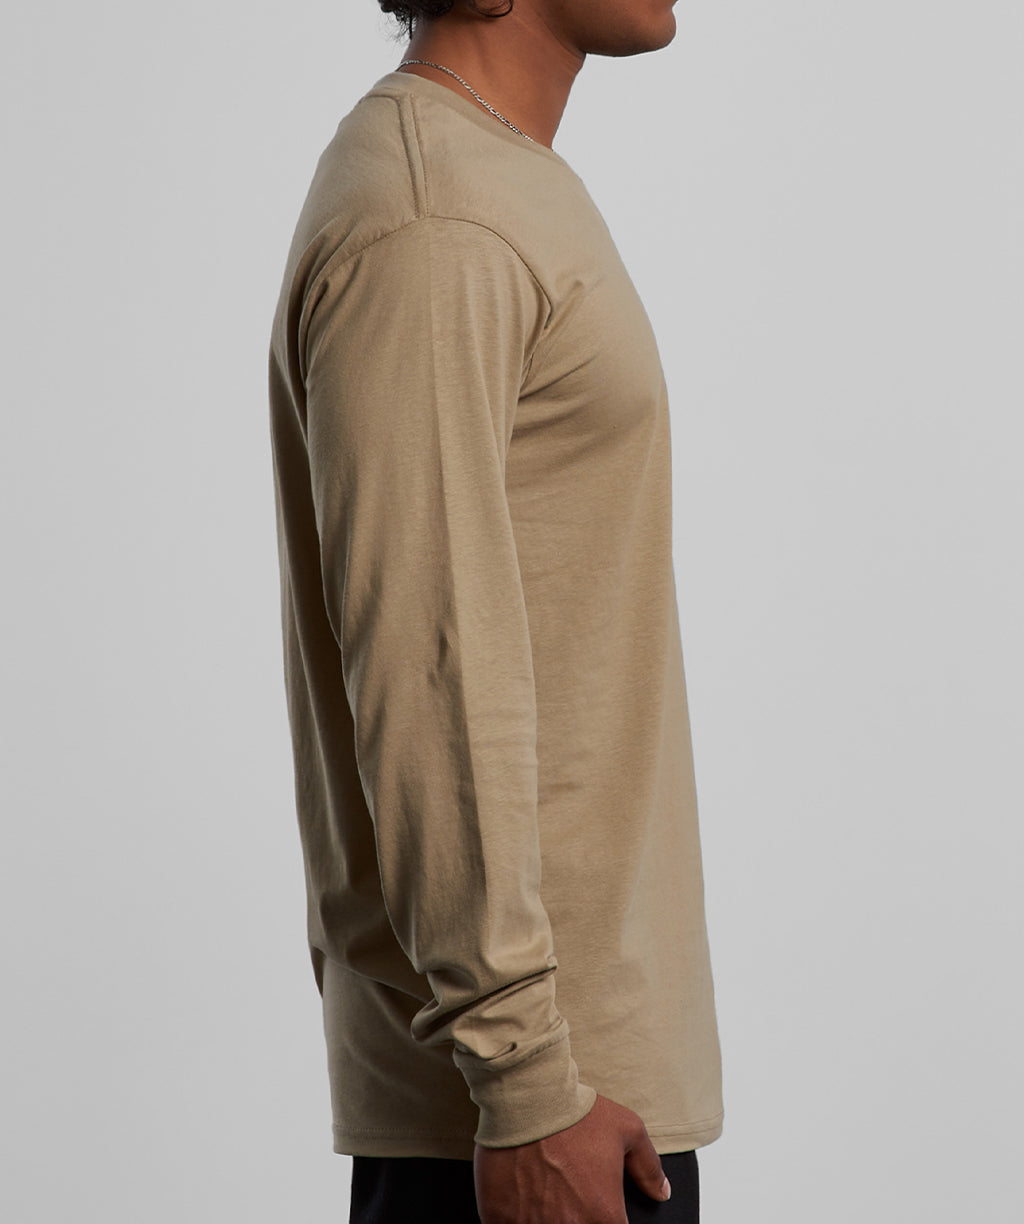 AS Colour 5020 Long Sleeve Tshirt